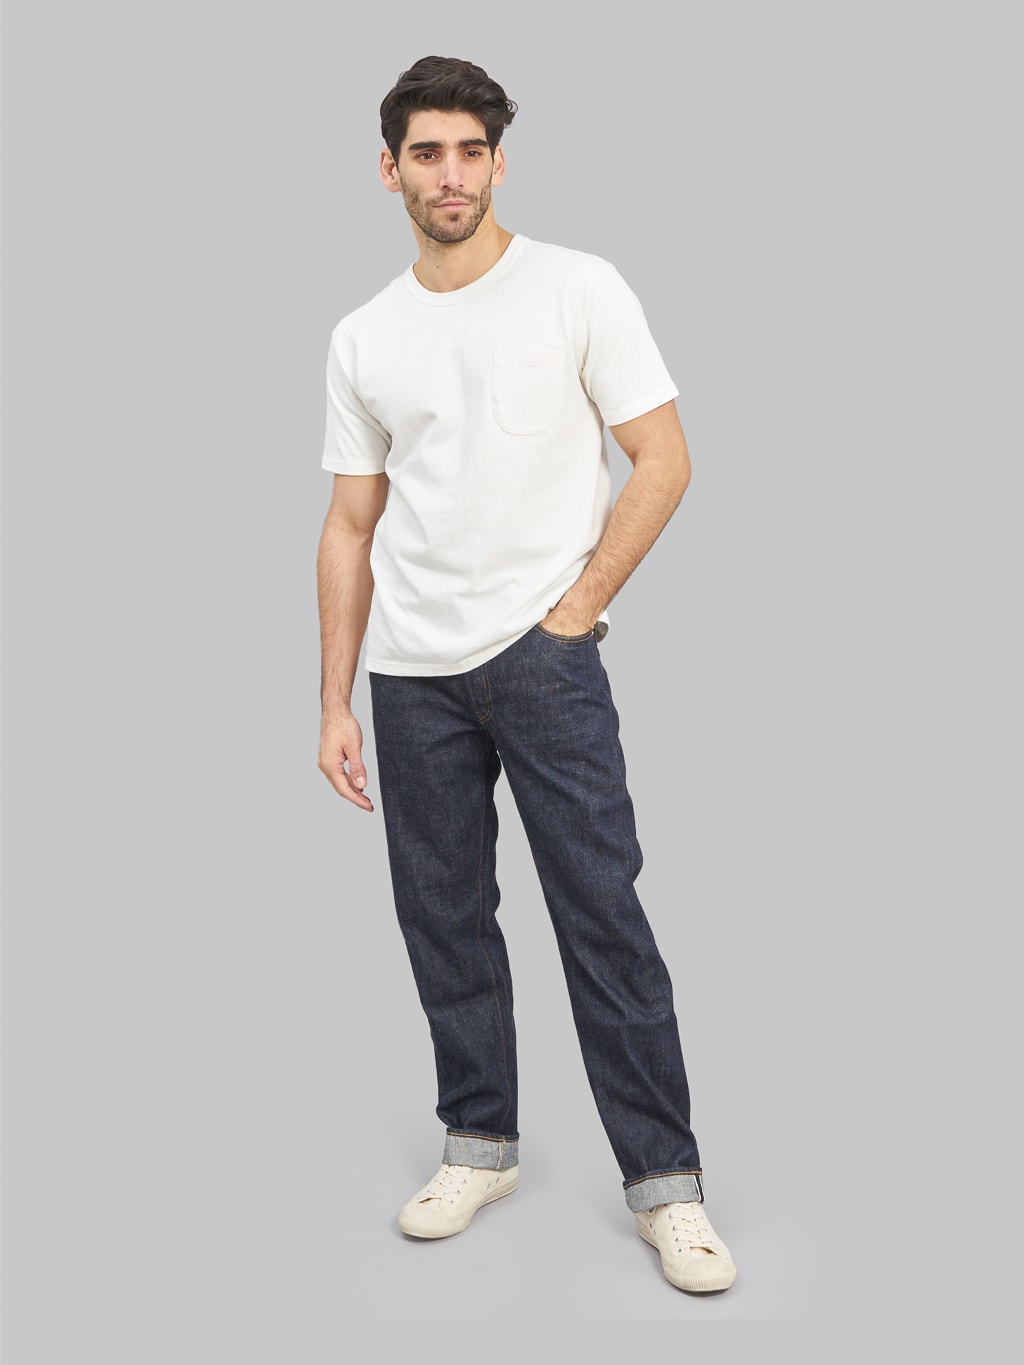 fullcount 1103 clean straight selvedge denim jeans style